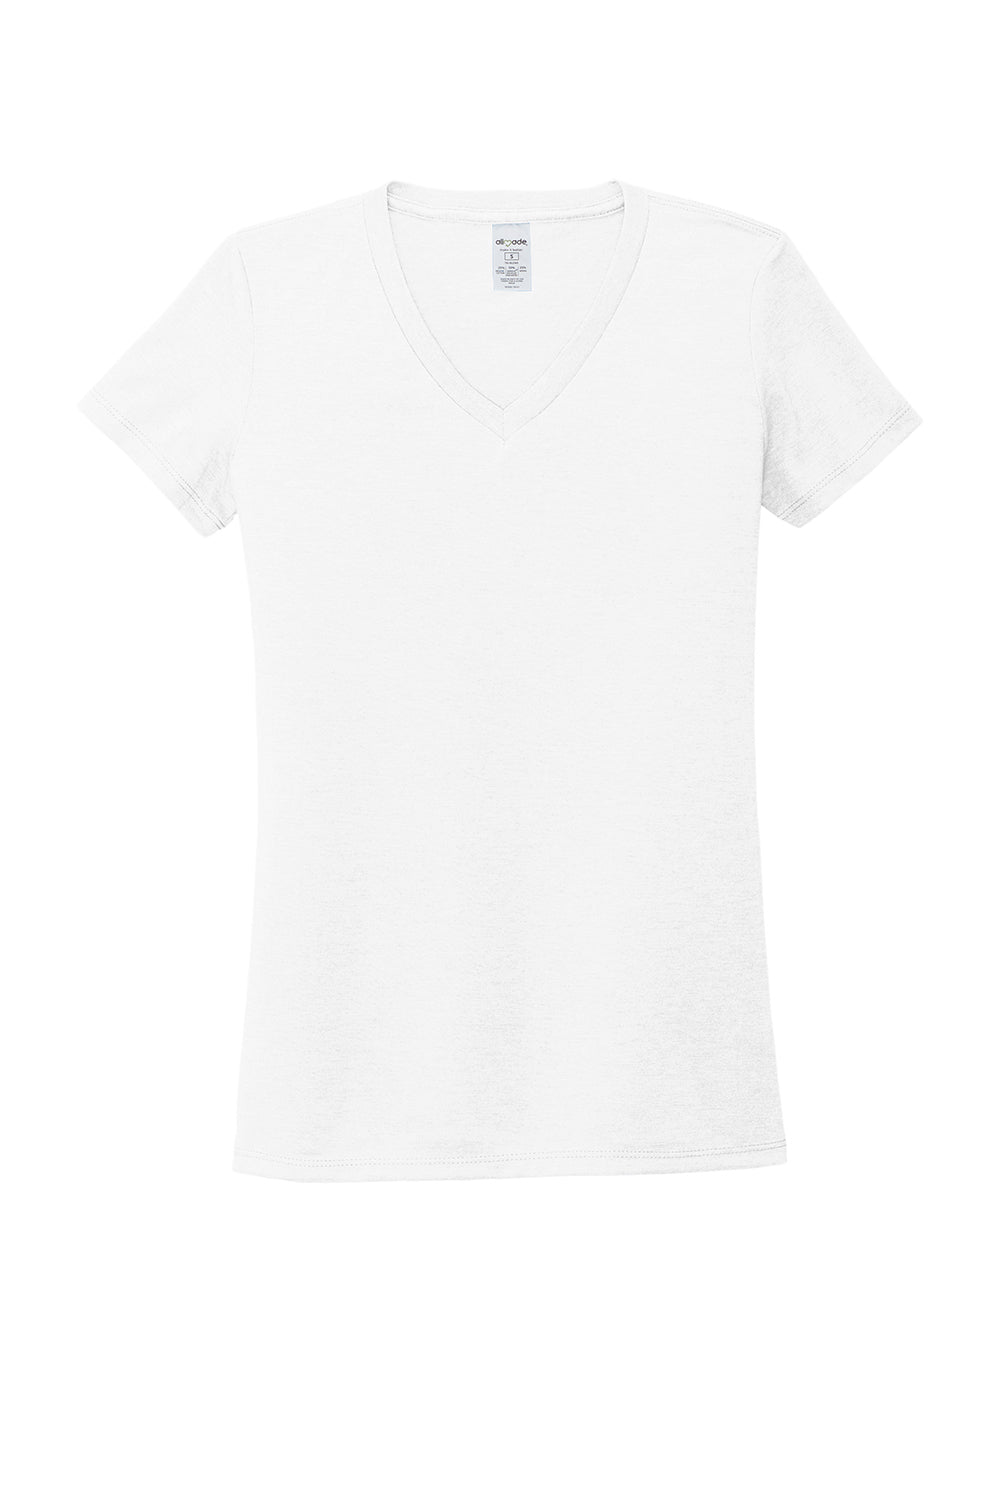 Allmade AL2018 Womens Short Sleeve V-Neck T-Shirt Bright White Flat Front